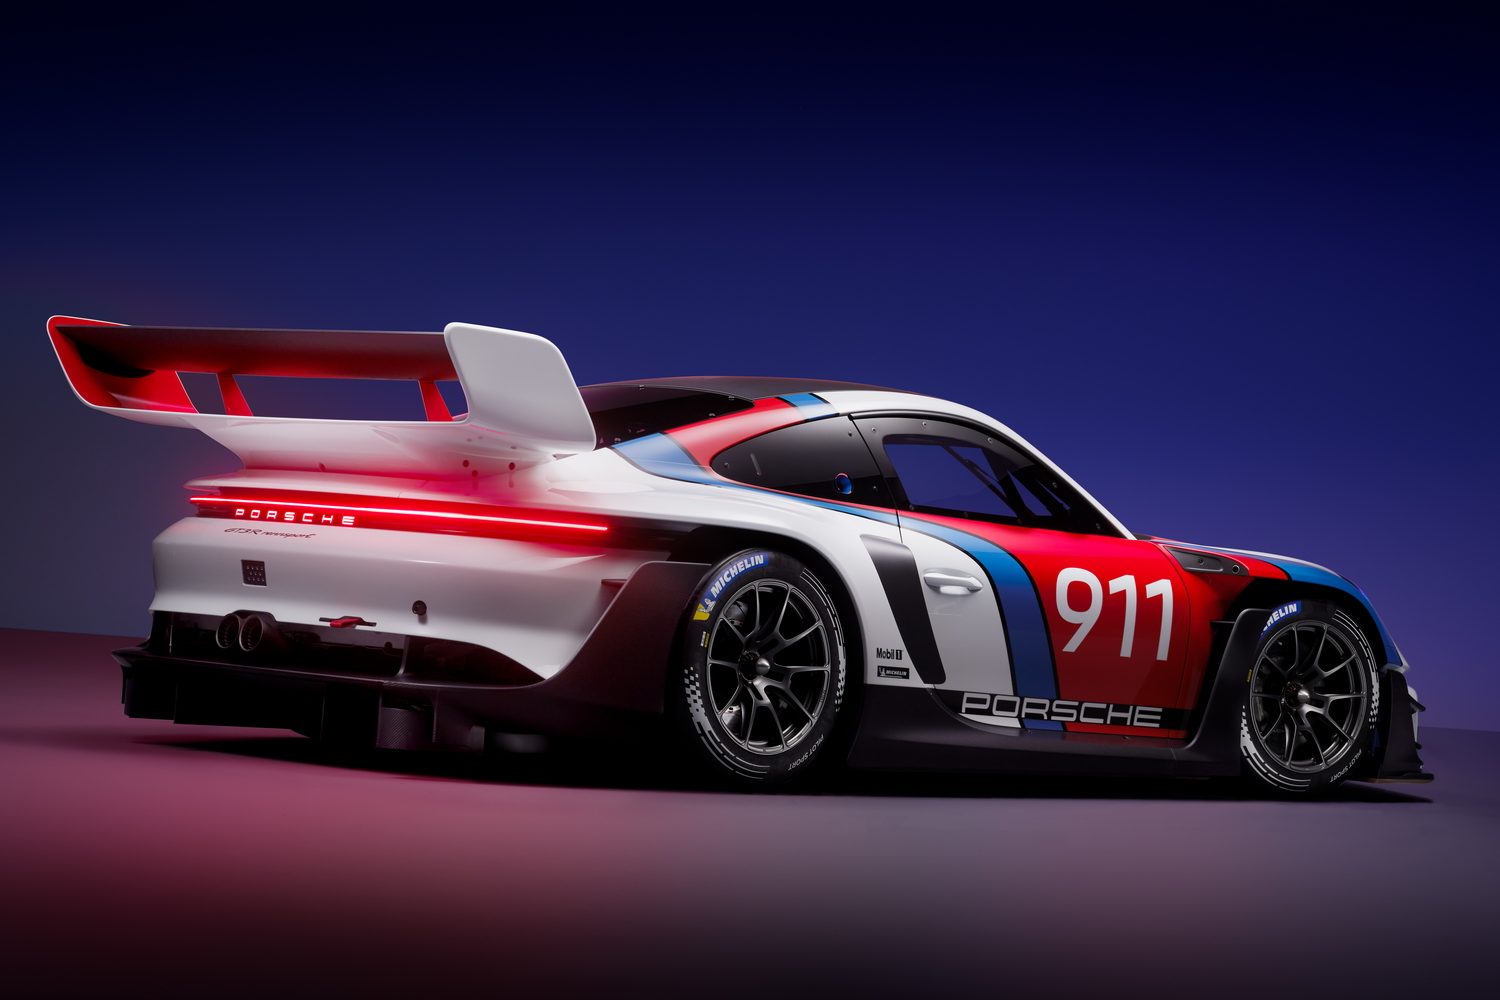 Porsche unveils 911 GT3 R Rennsport - car and motoring news by